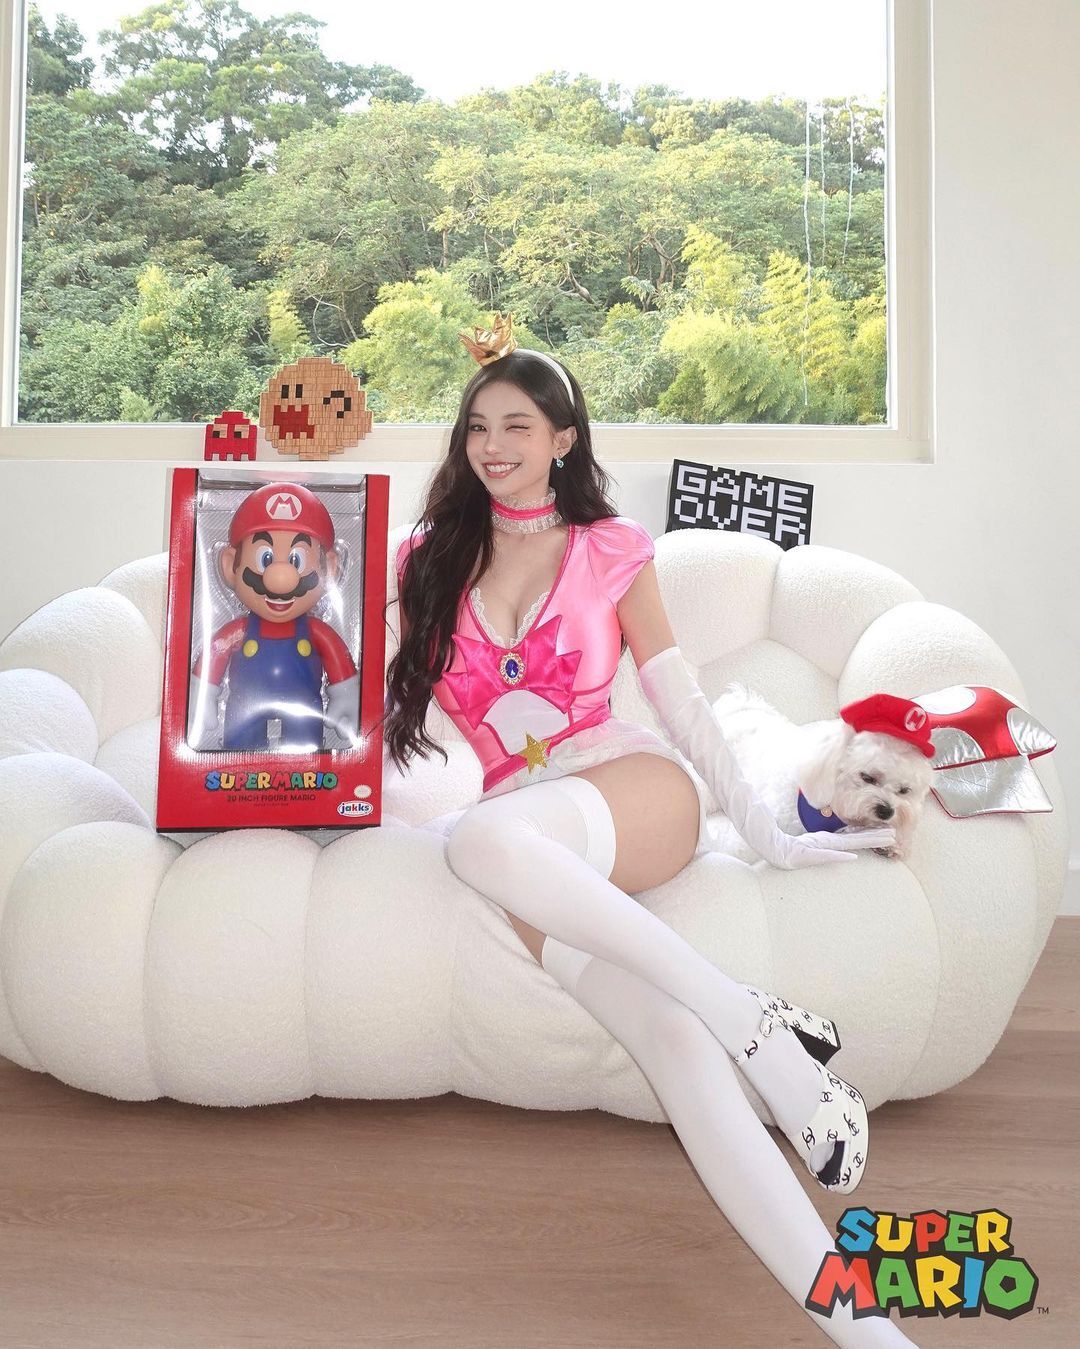 Princess Super Mario Peach cosplay